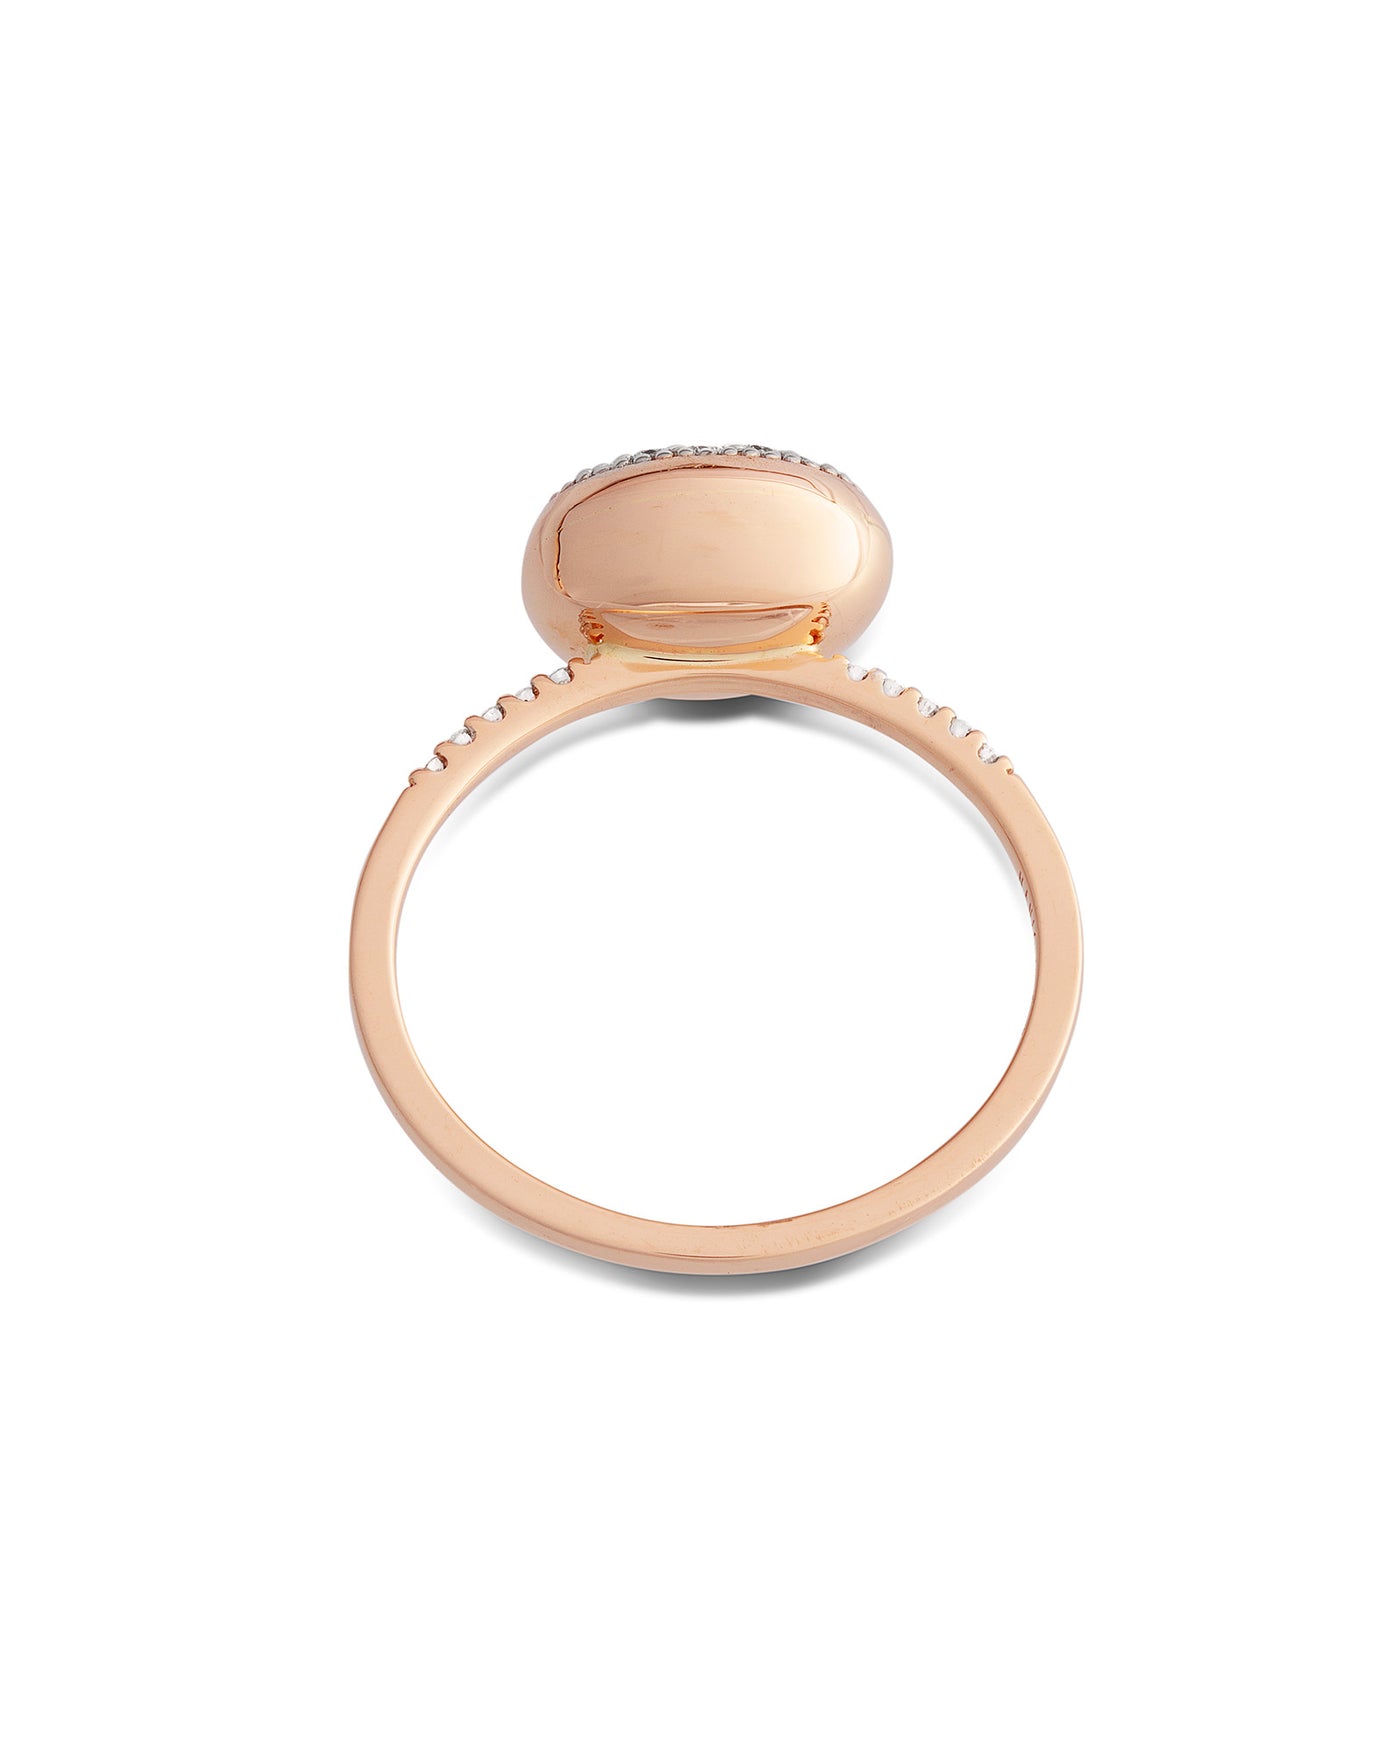 "dancing Élite" rose gold and diamonds romantic engagement ring (medium)